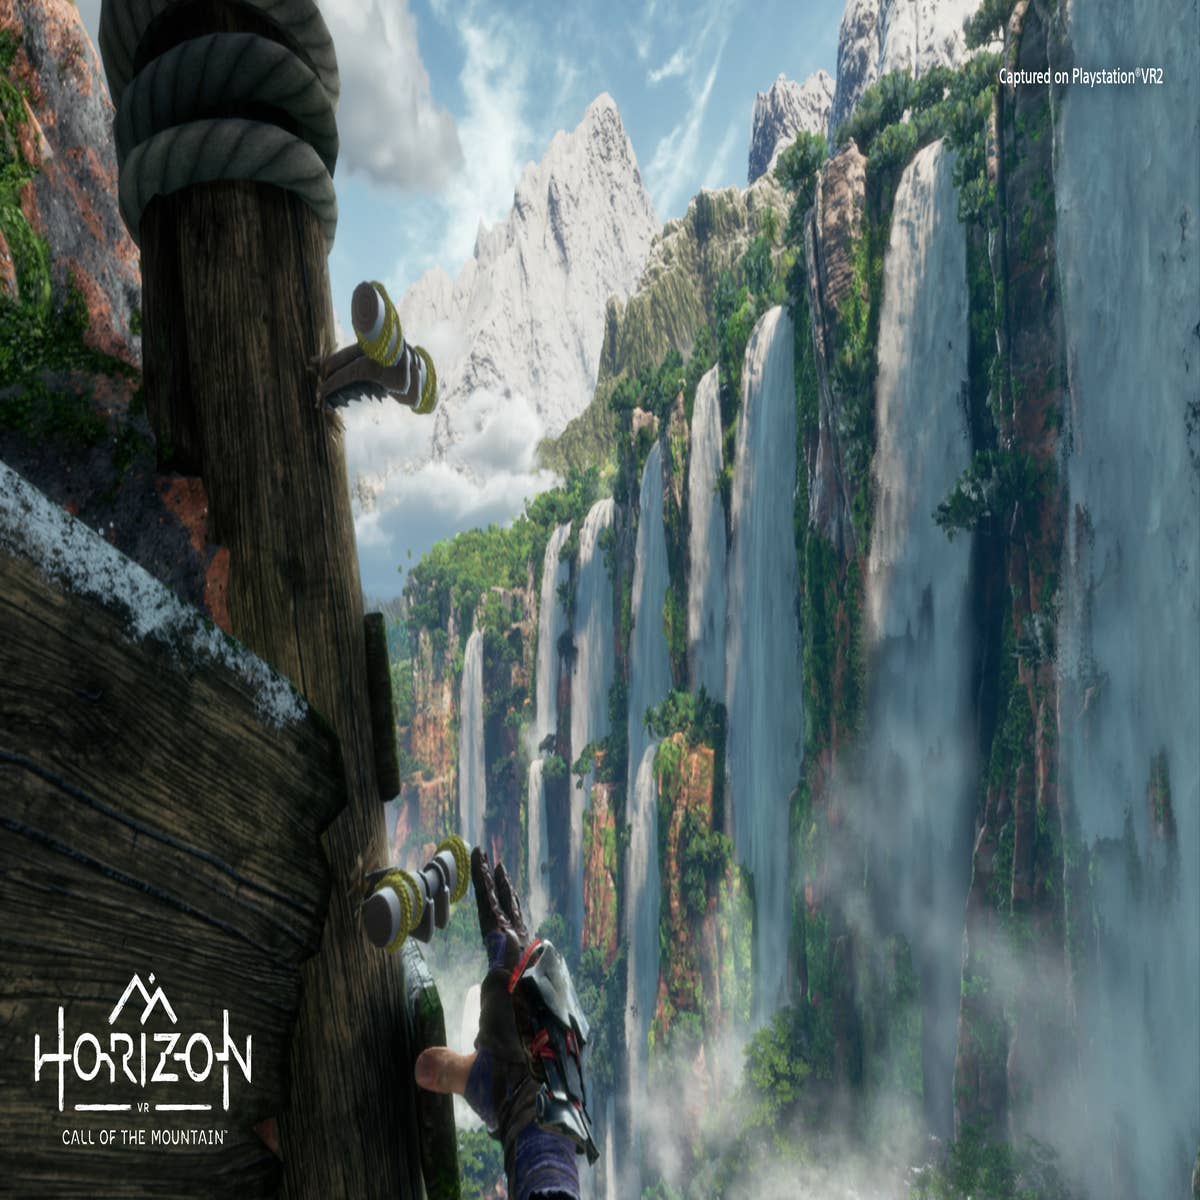 Horizon Call of the Mountain review - a visually spectacular